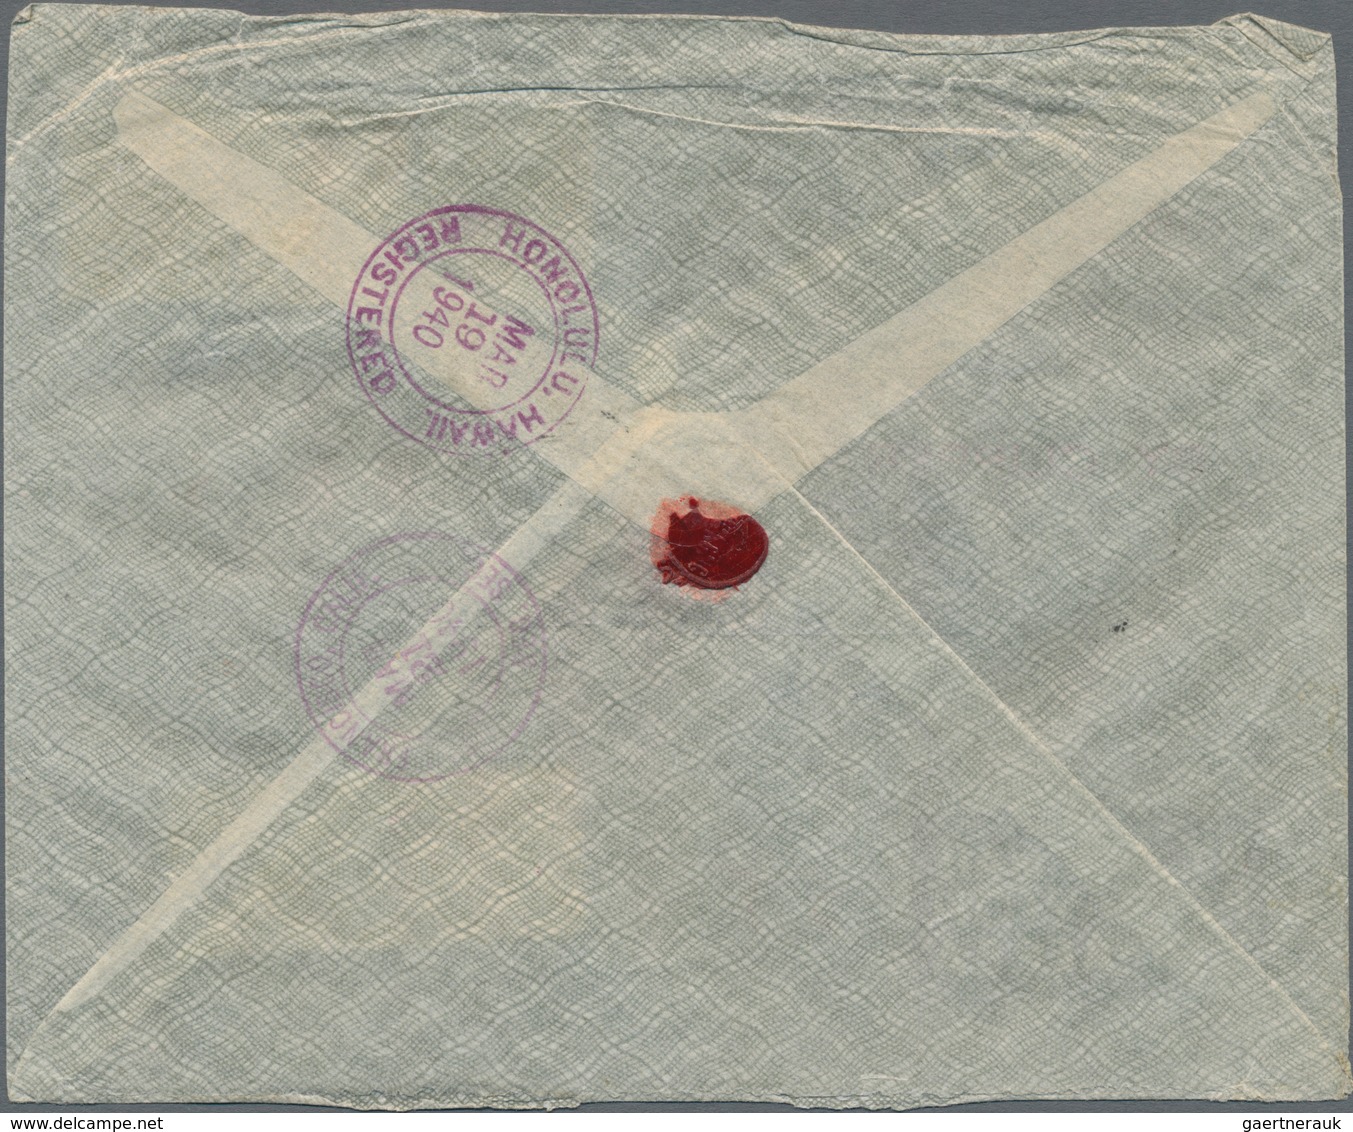 Hongkong - Besonderheiten: 1938/40, registered air mail clipper covers (6) from American Express Co.